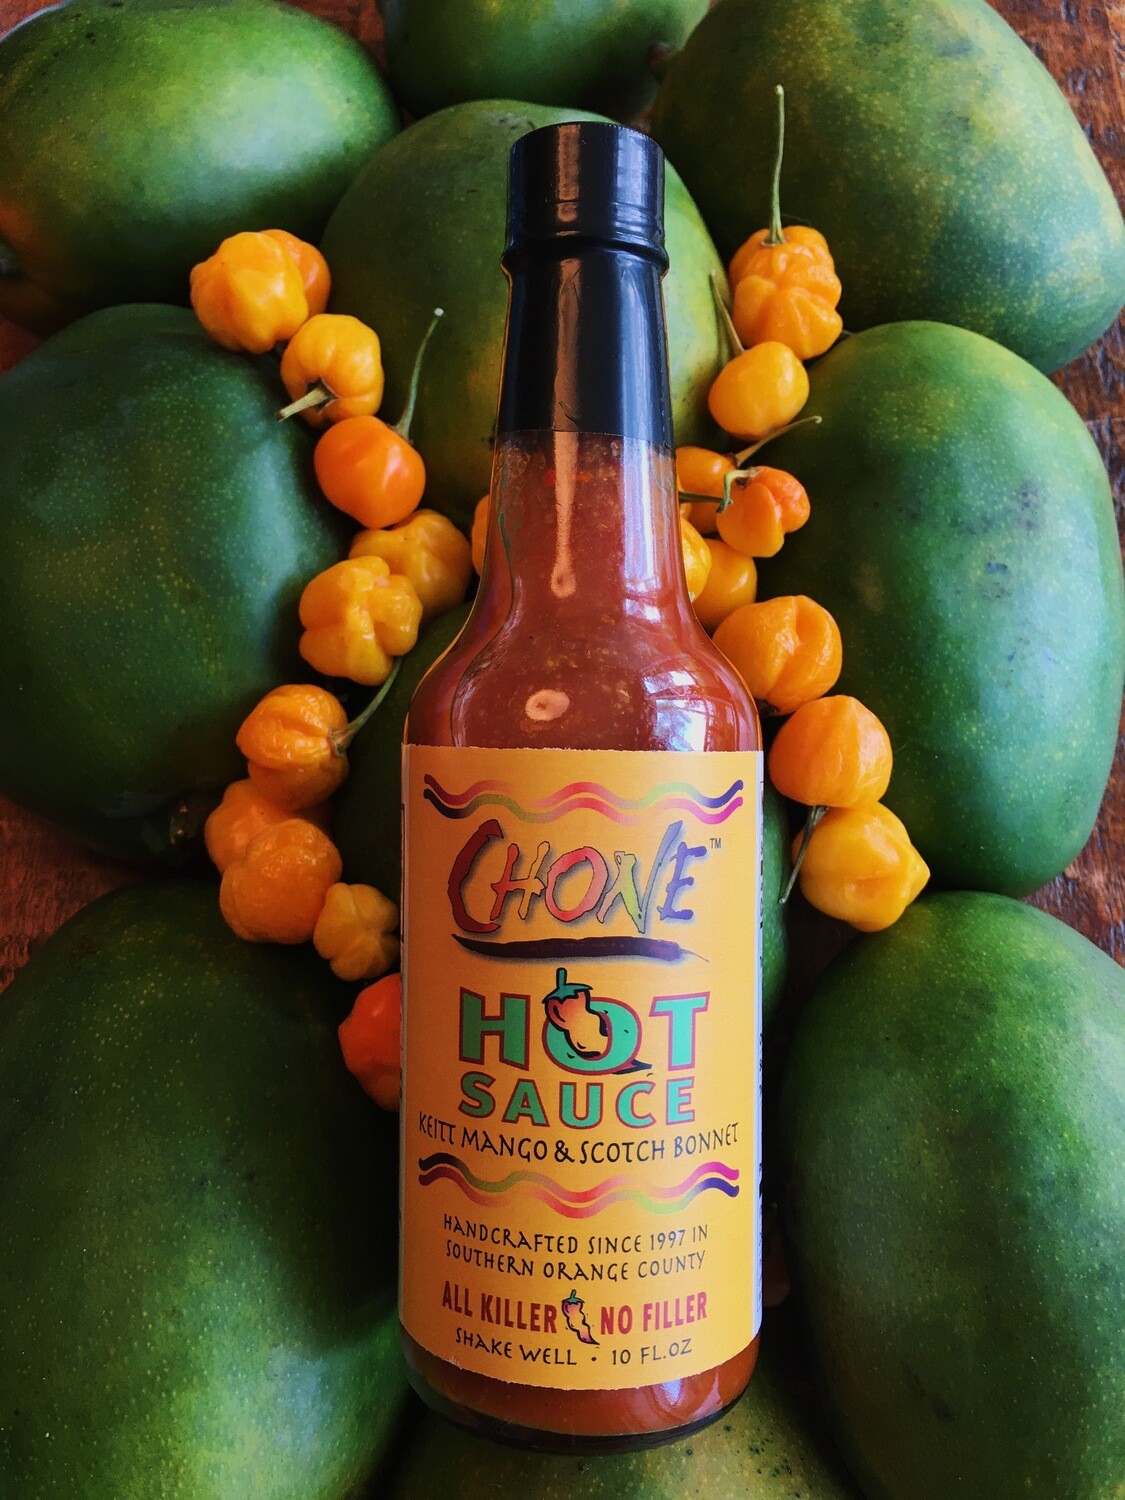 Chone Keitt Mango & Scotch Bonnet Seasonal Hot Sauce - 2020, 5 oz